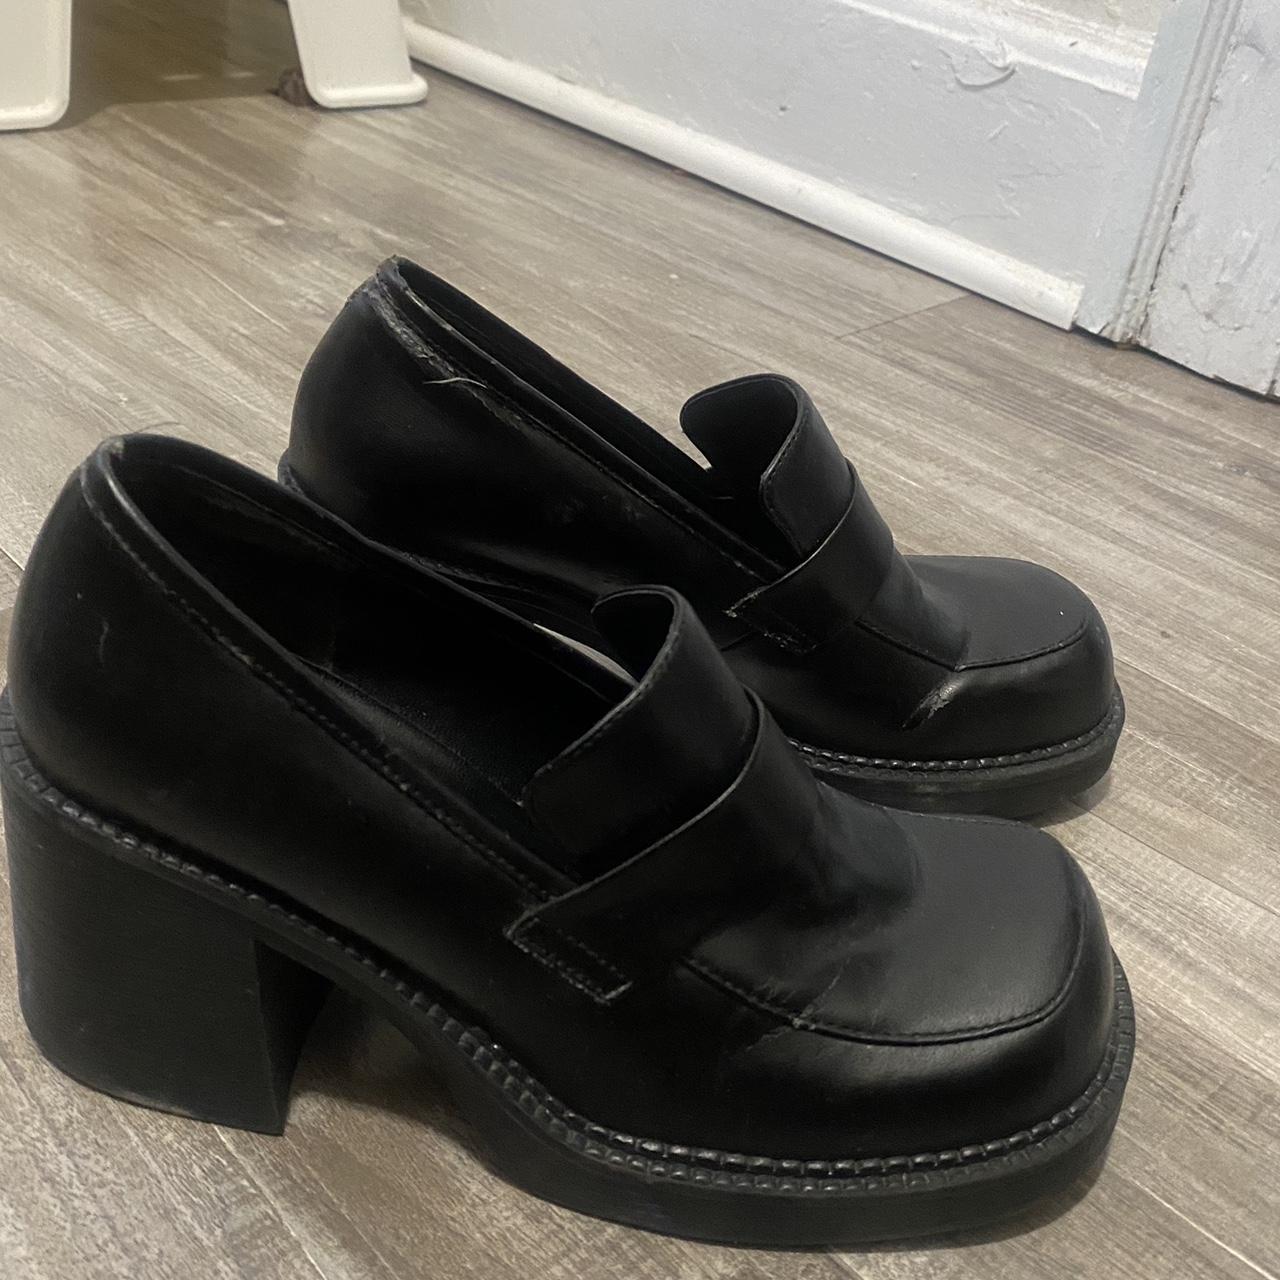 Black platform/heeled mary janes Minimal wear, as... - Depop